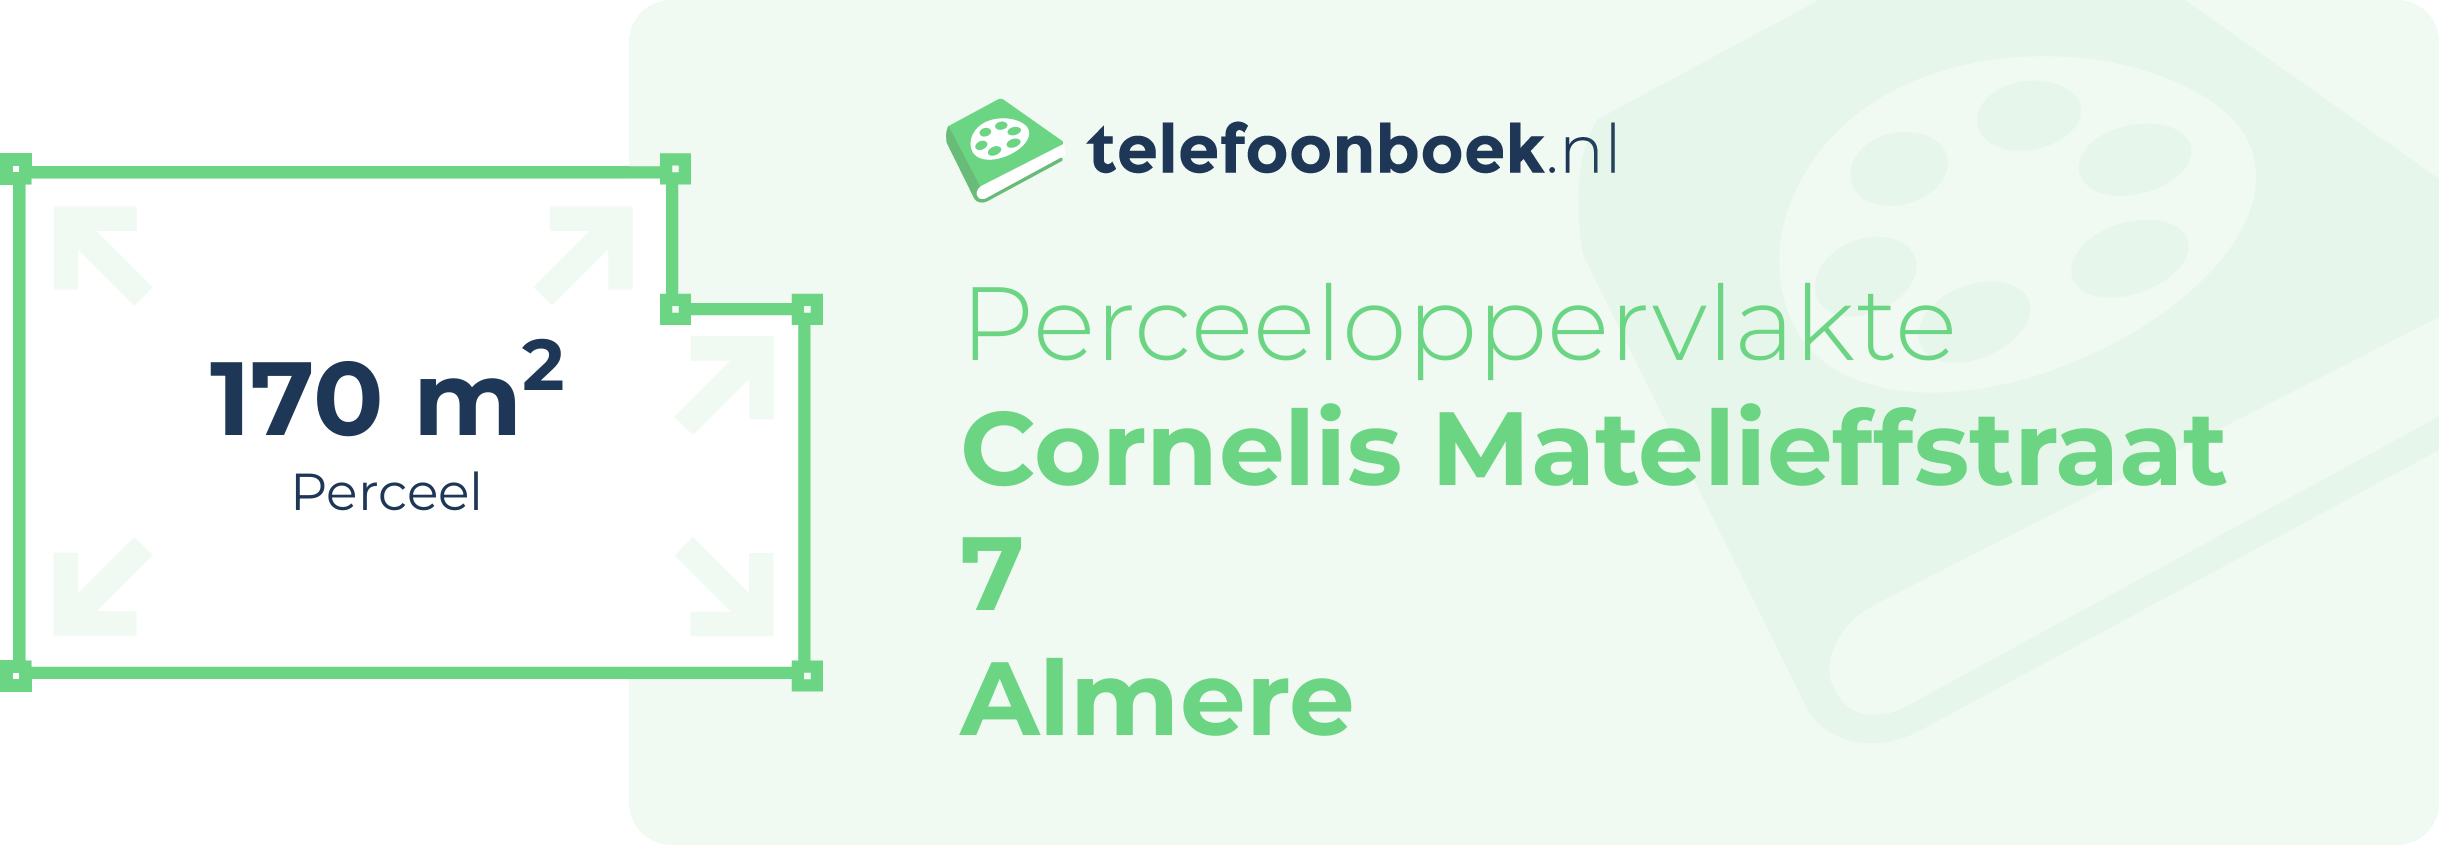 Perceeloppervlakte Cornelis Matelieffstraat 7 Almere